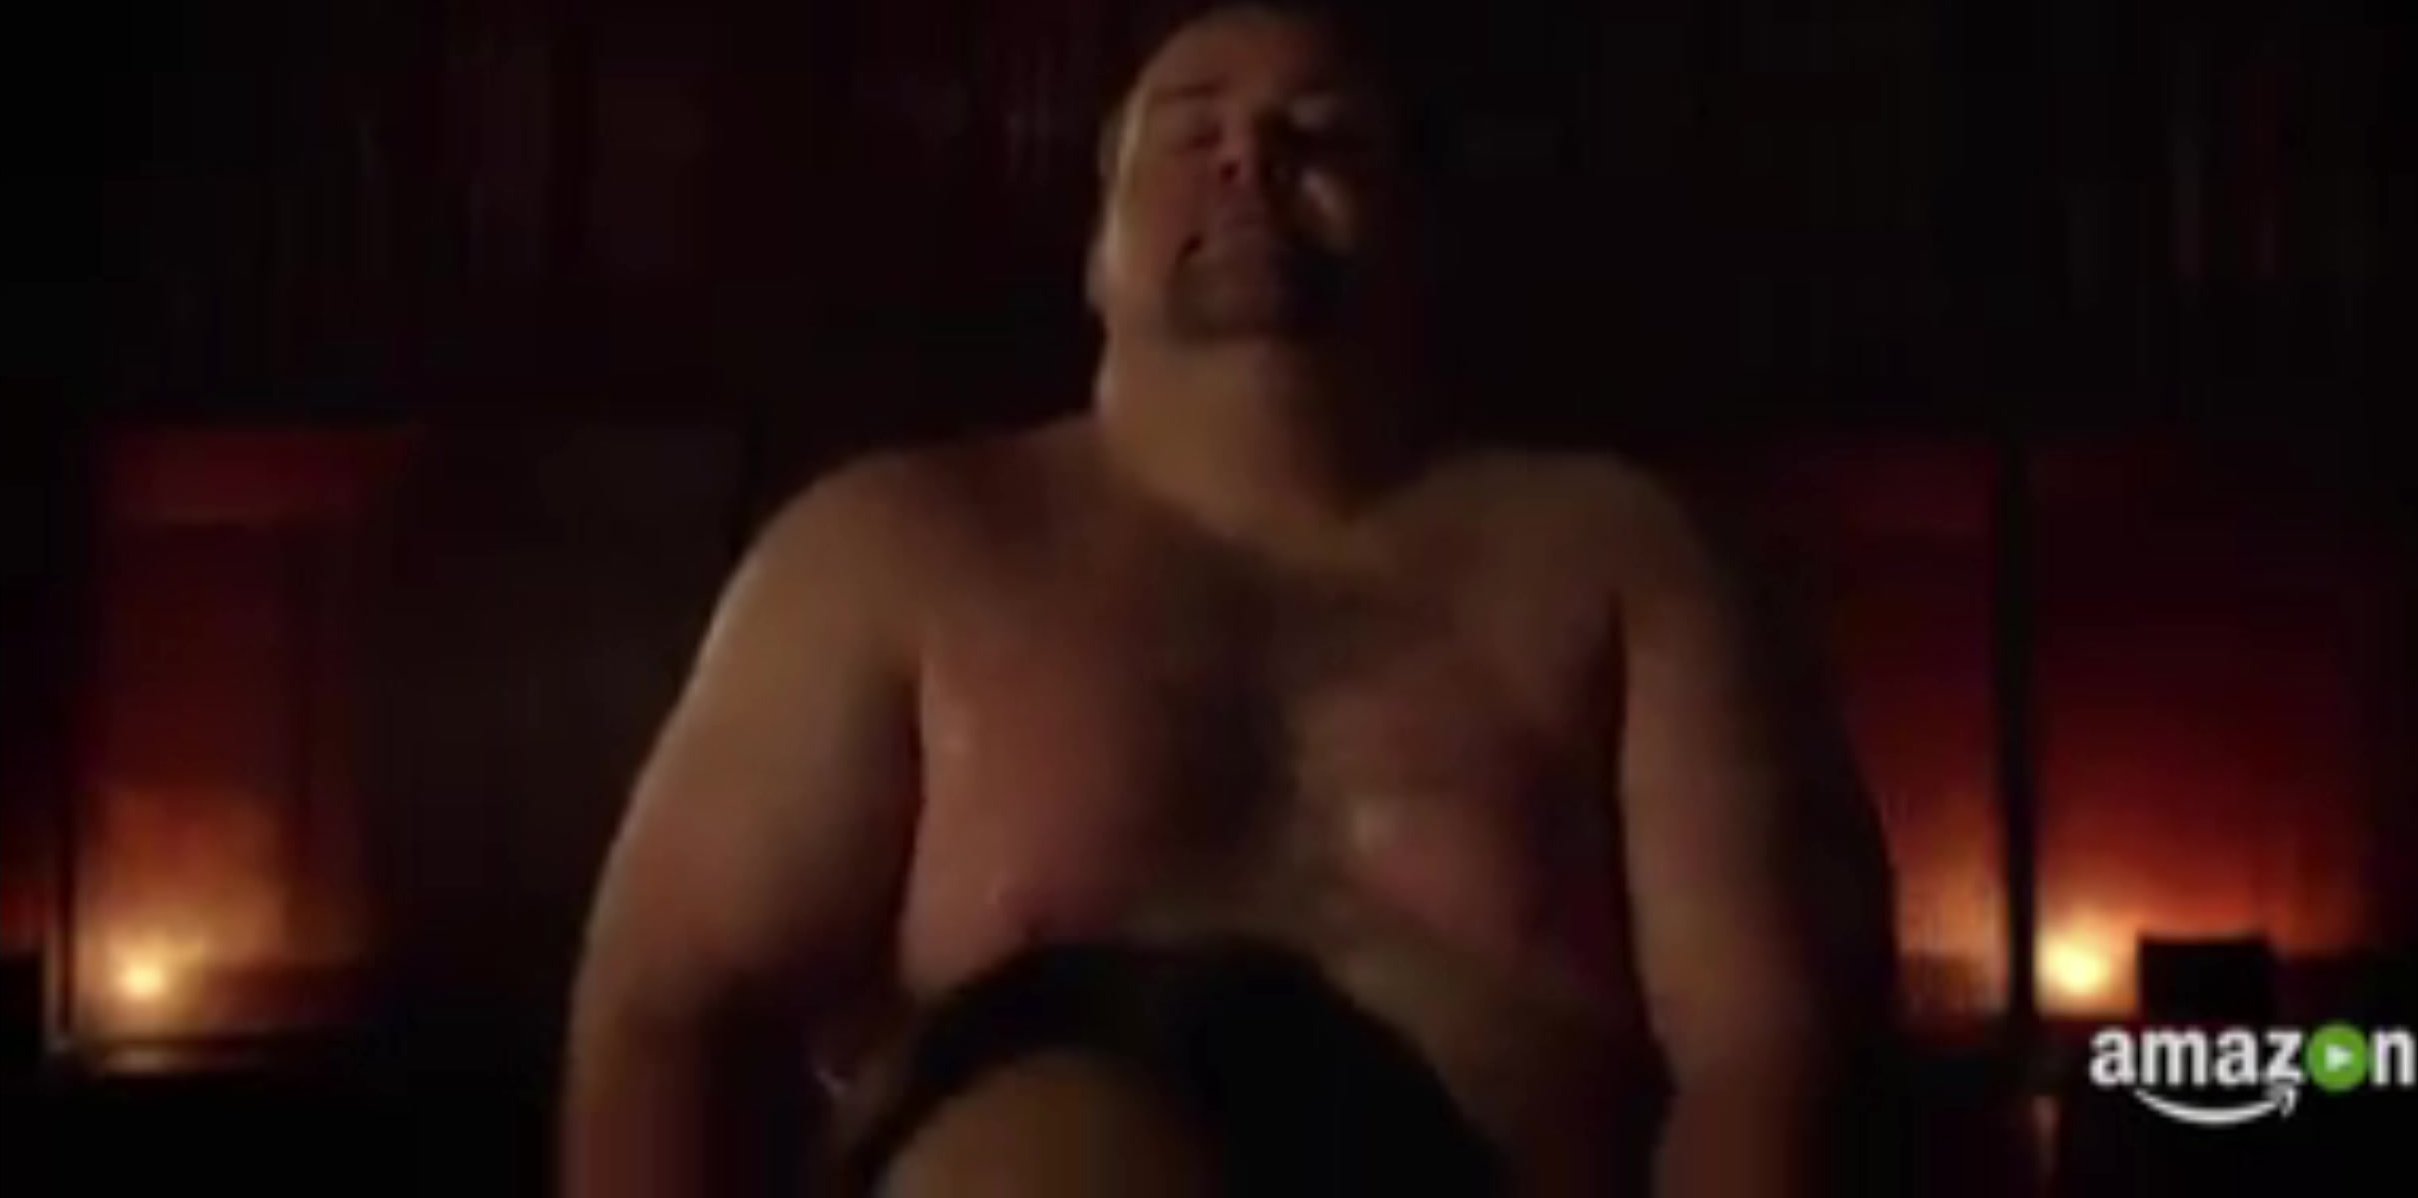 Chubby man sex scene